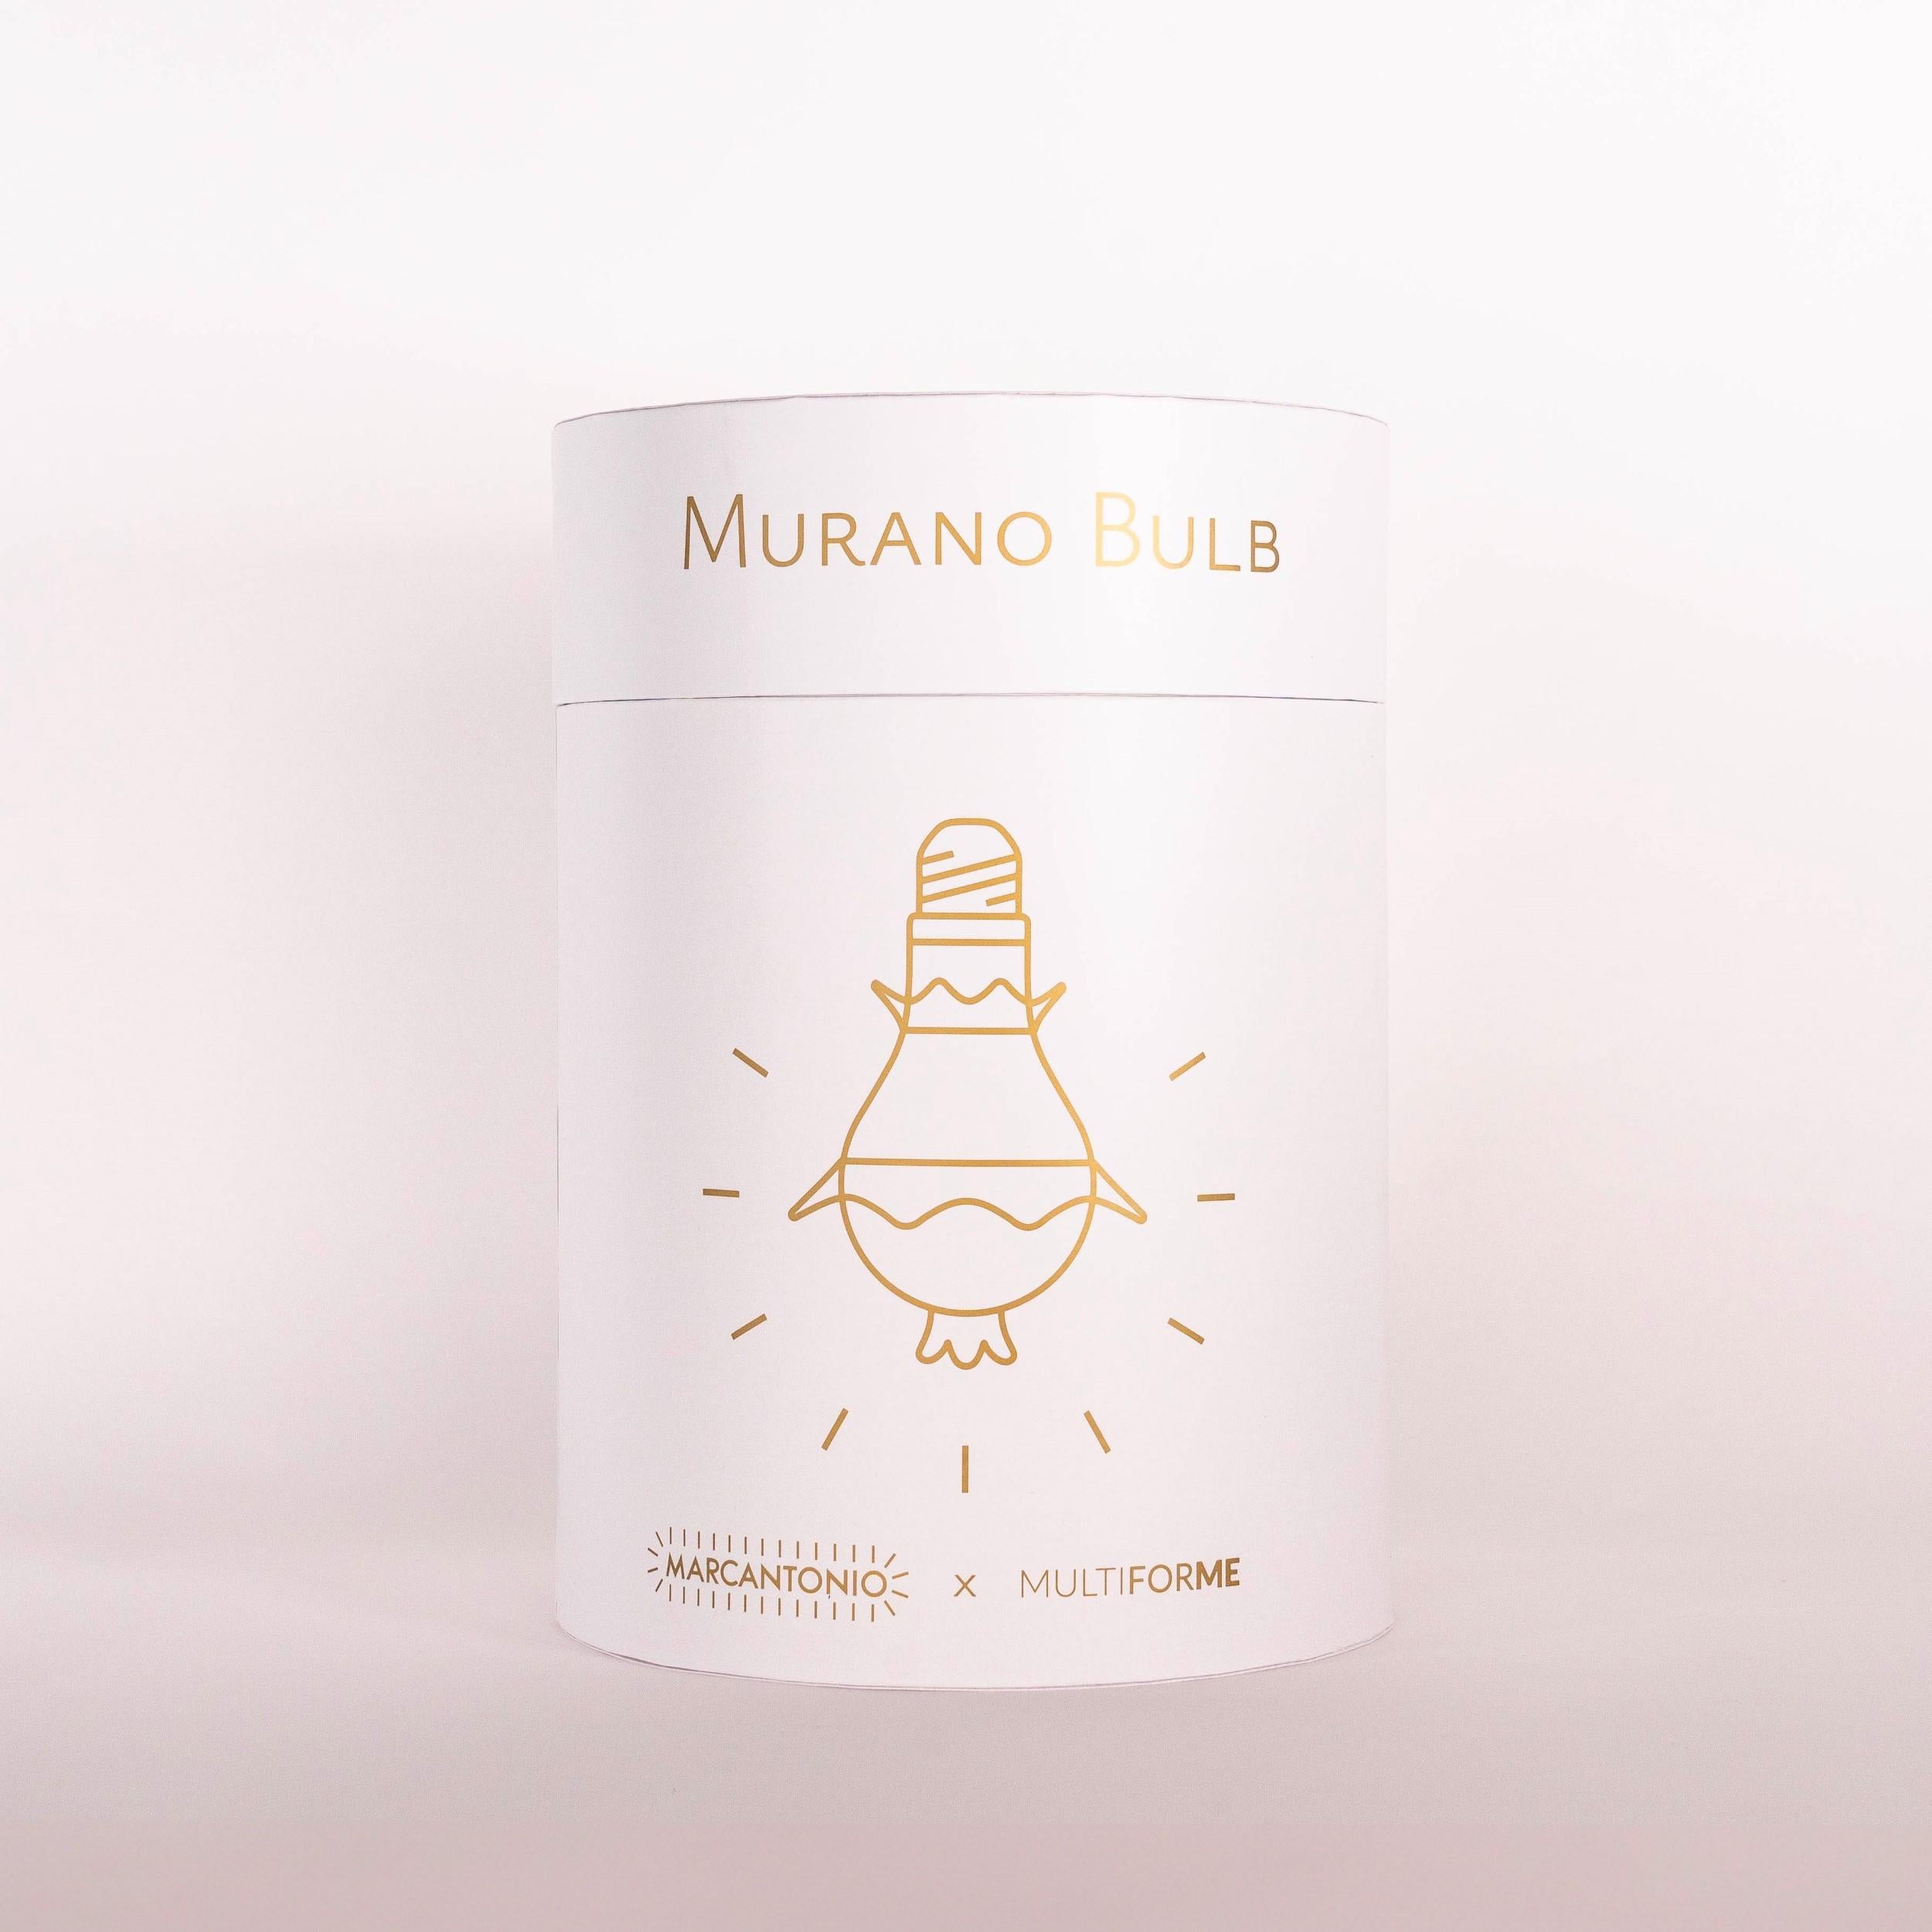 Artistic Glas Glühbirne Kronleuchter Murano Bulb Marcantonio X Multiforme #07 im Angebot 4